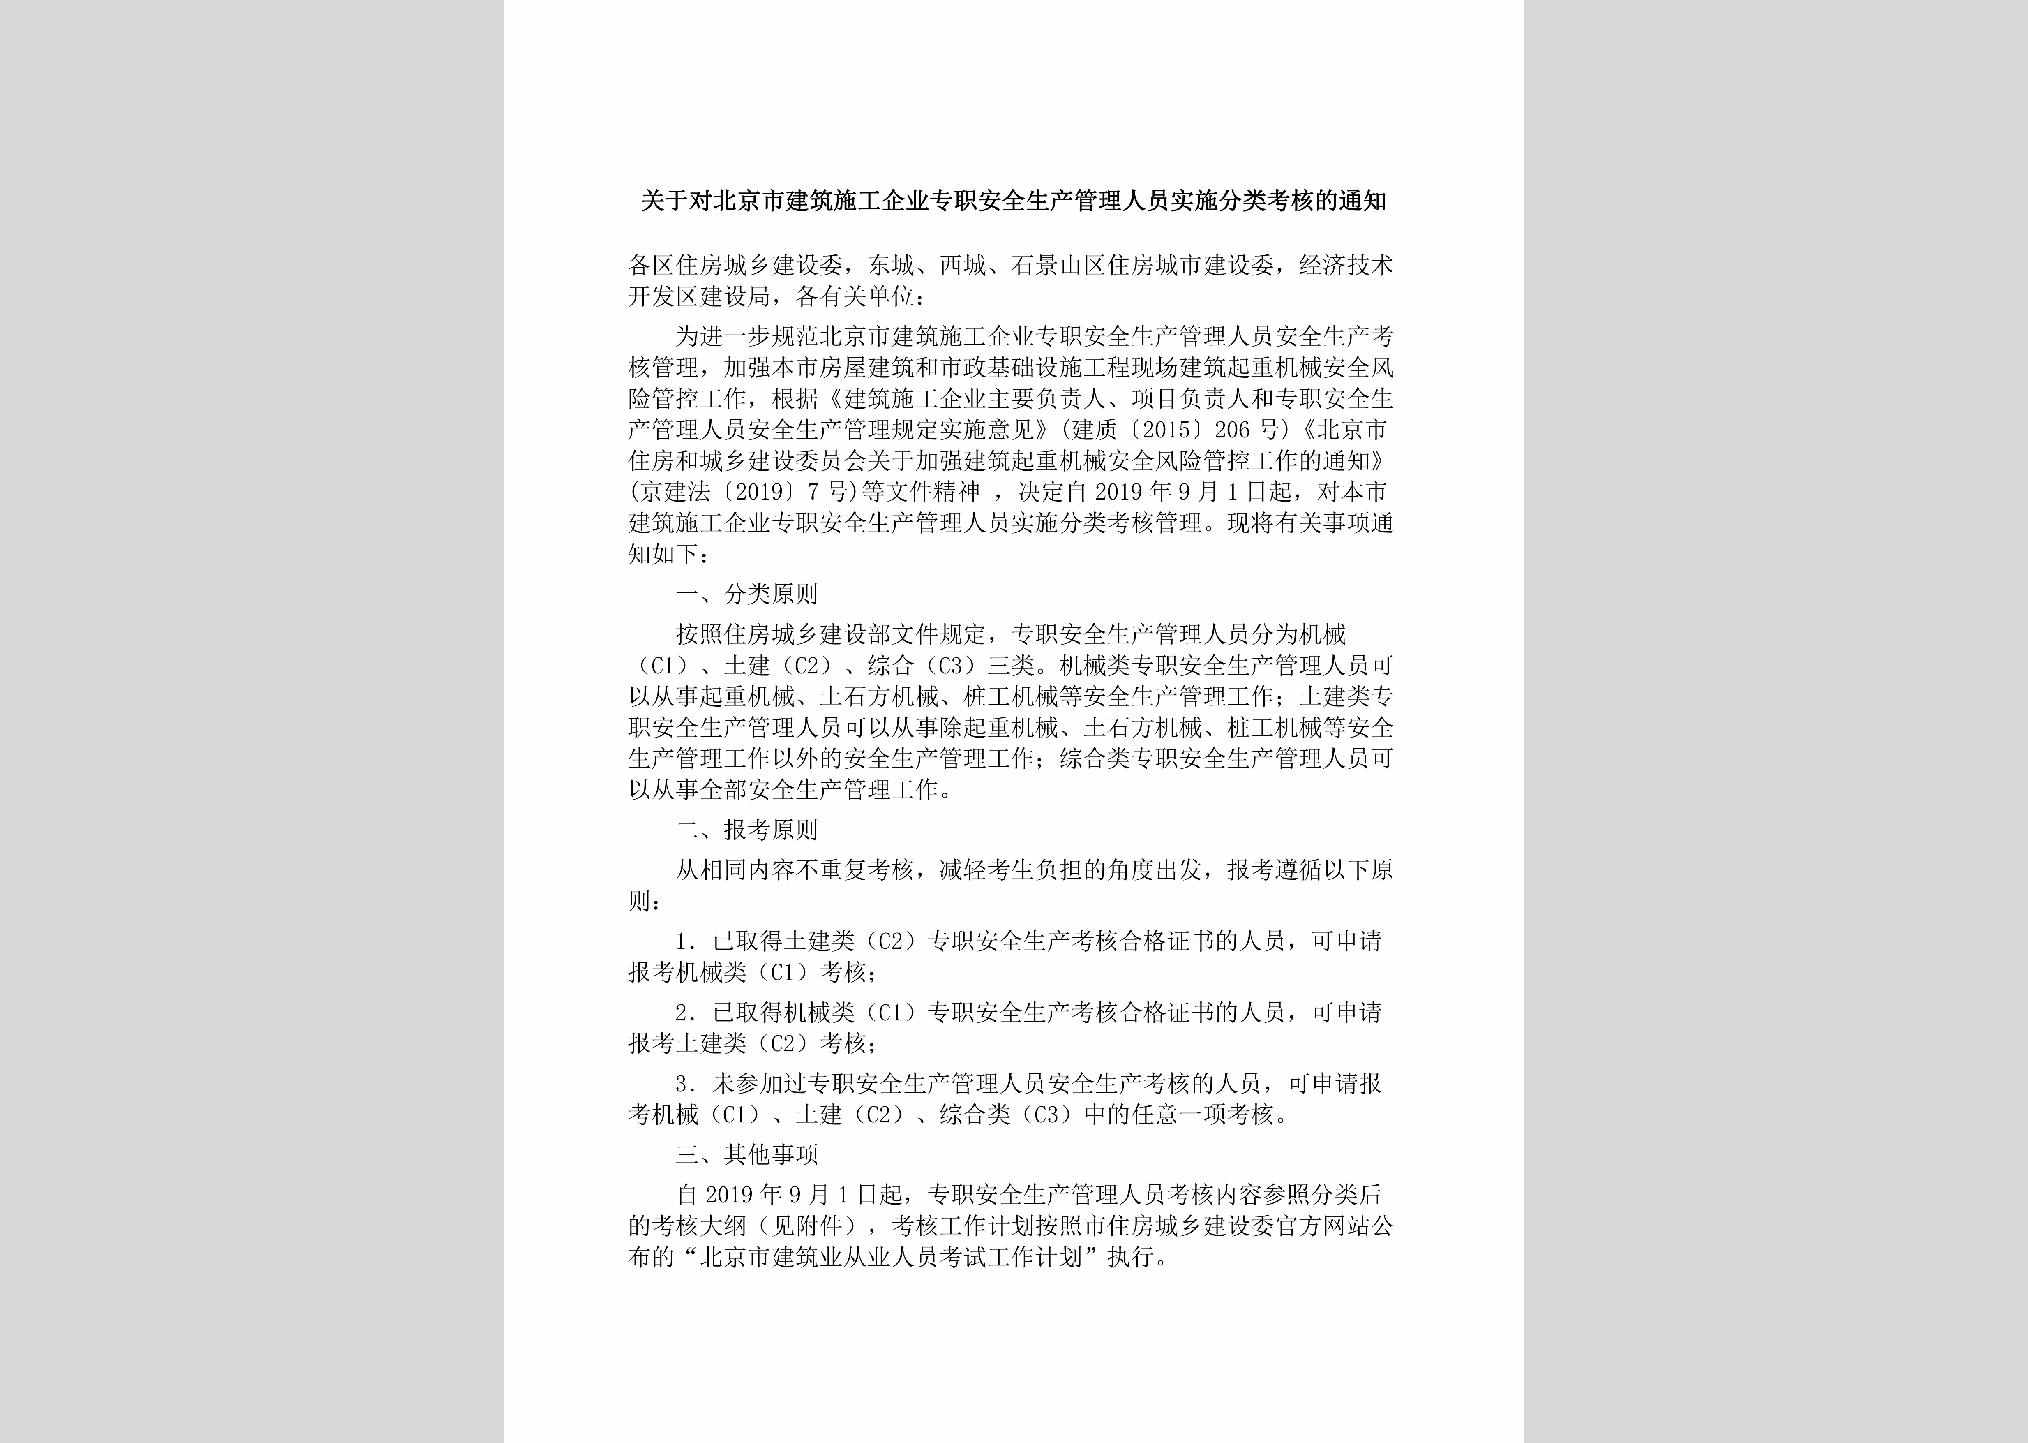 BJ-JZSGQYZZ-2019：关于对北京市建筑施工企业专职安全生产管理人员实施分类考核的通知